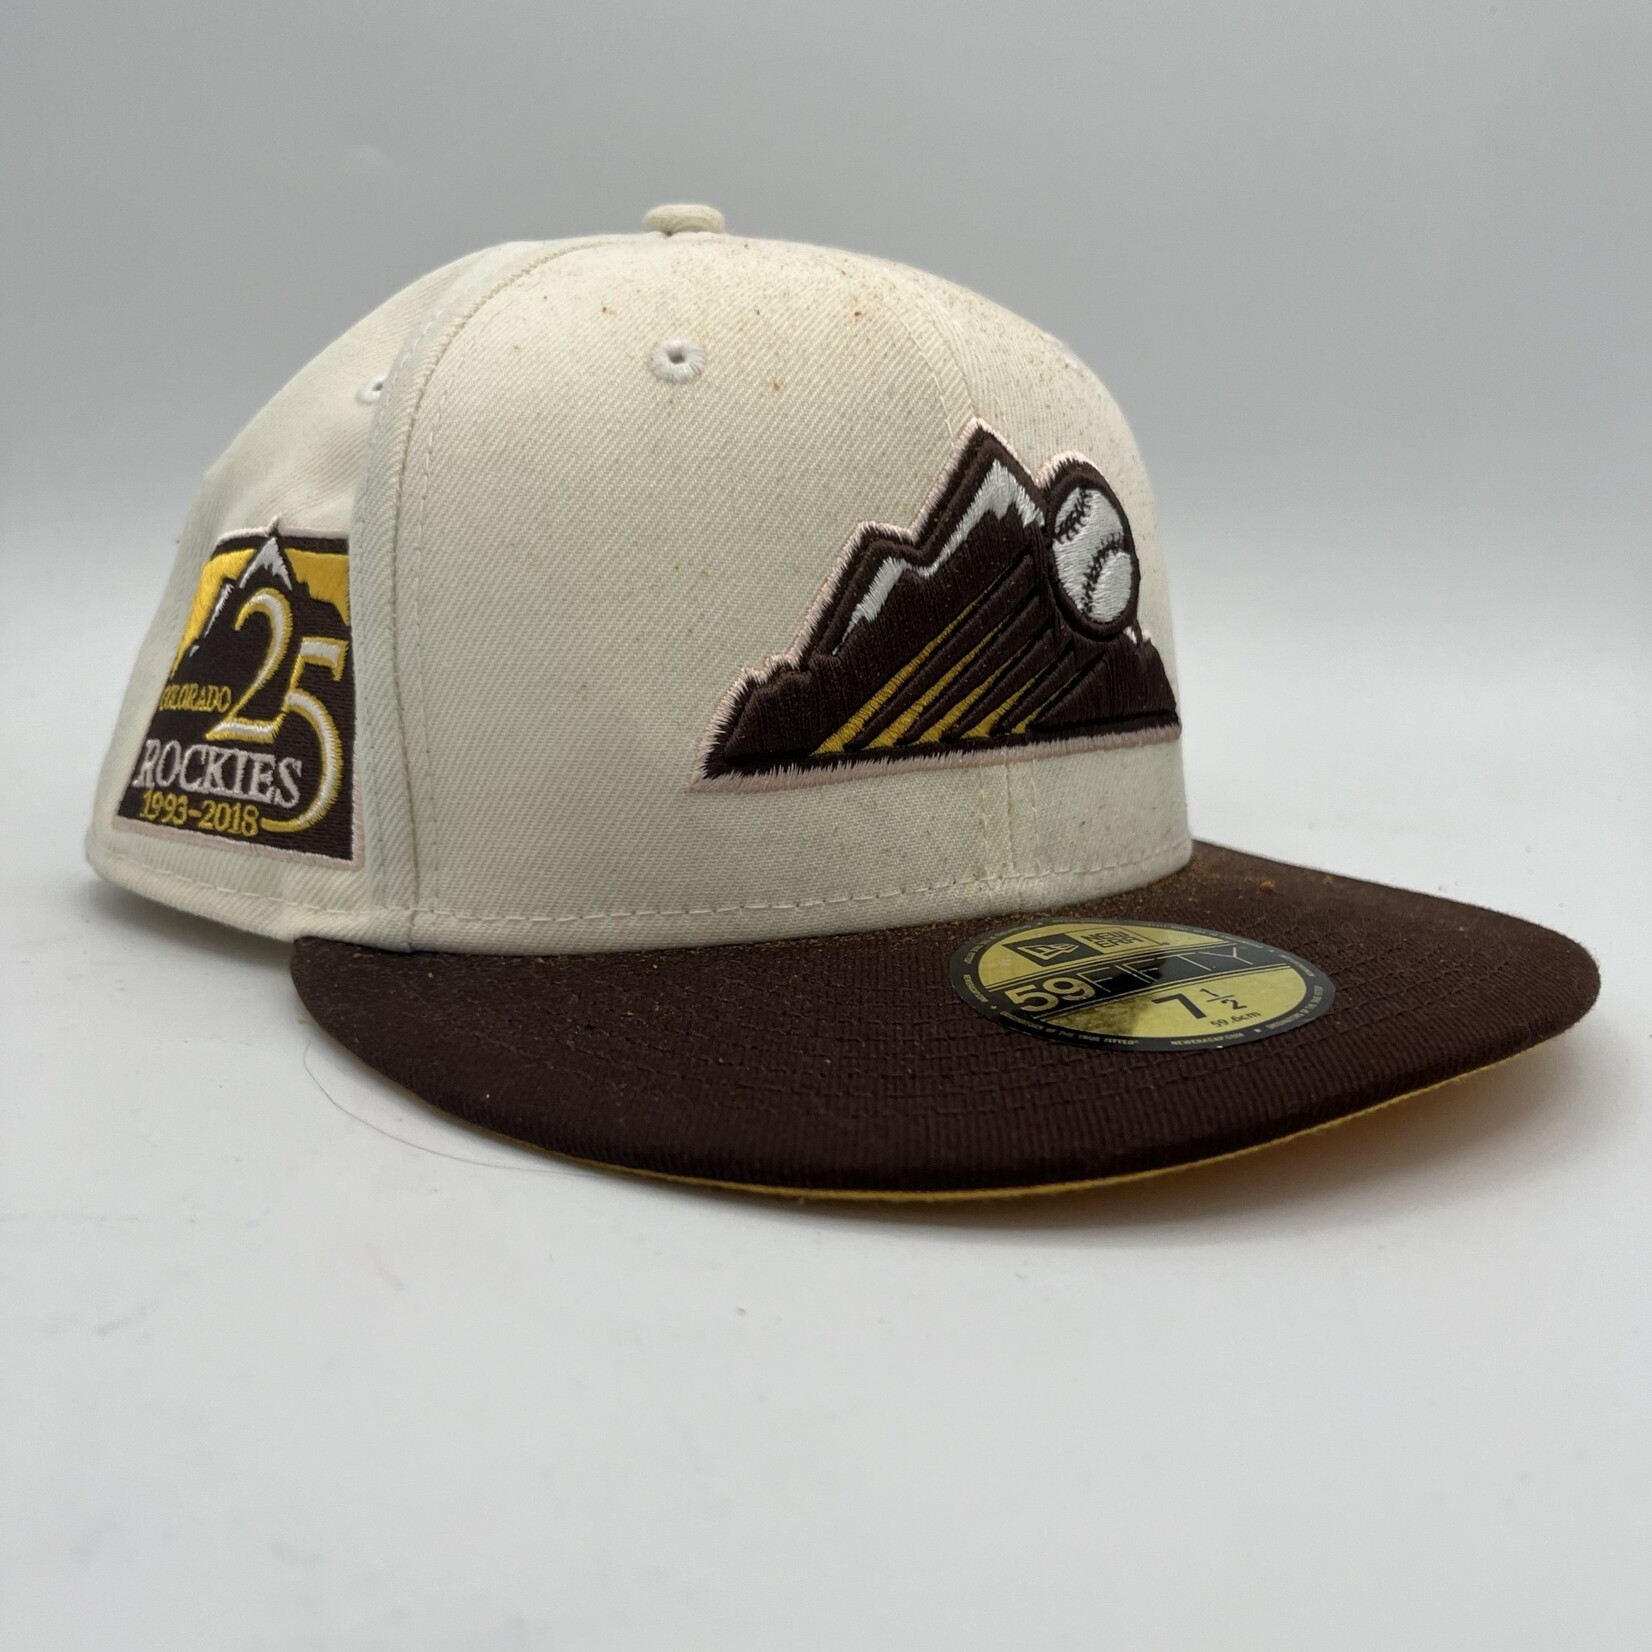 Mission Zero Reloved  Hat - Colorado Rockies 25th Anniversary